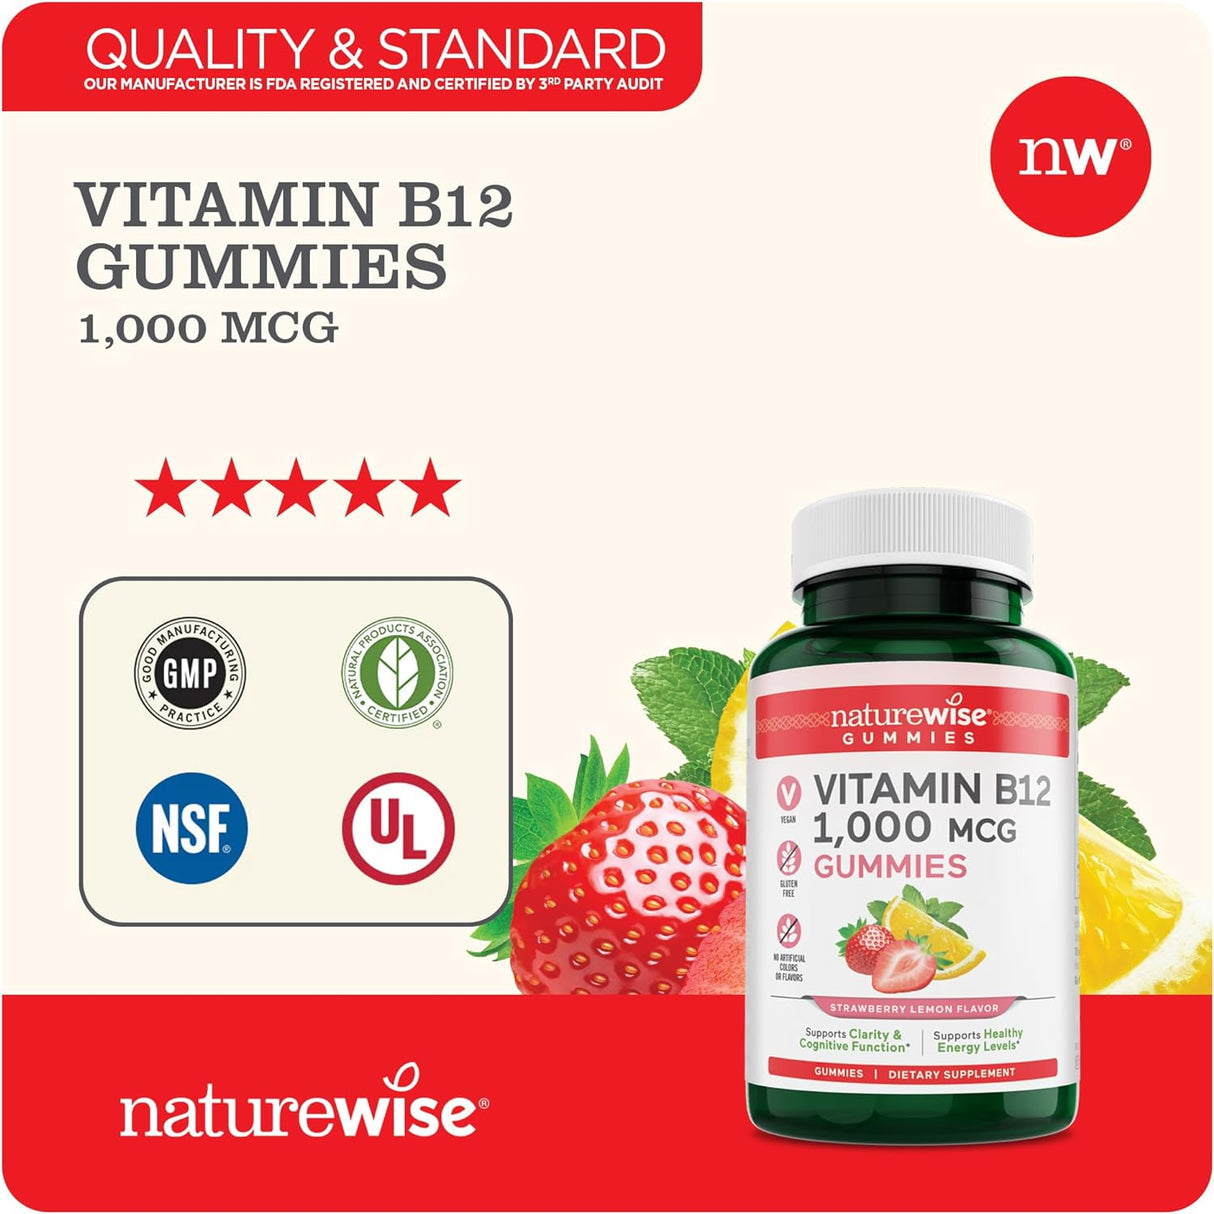 NatureWise Vitamin B12 1,000mcg trawberry Lemon Flavored Gummies 180 Gomitas